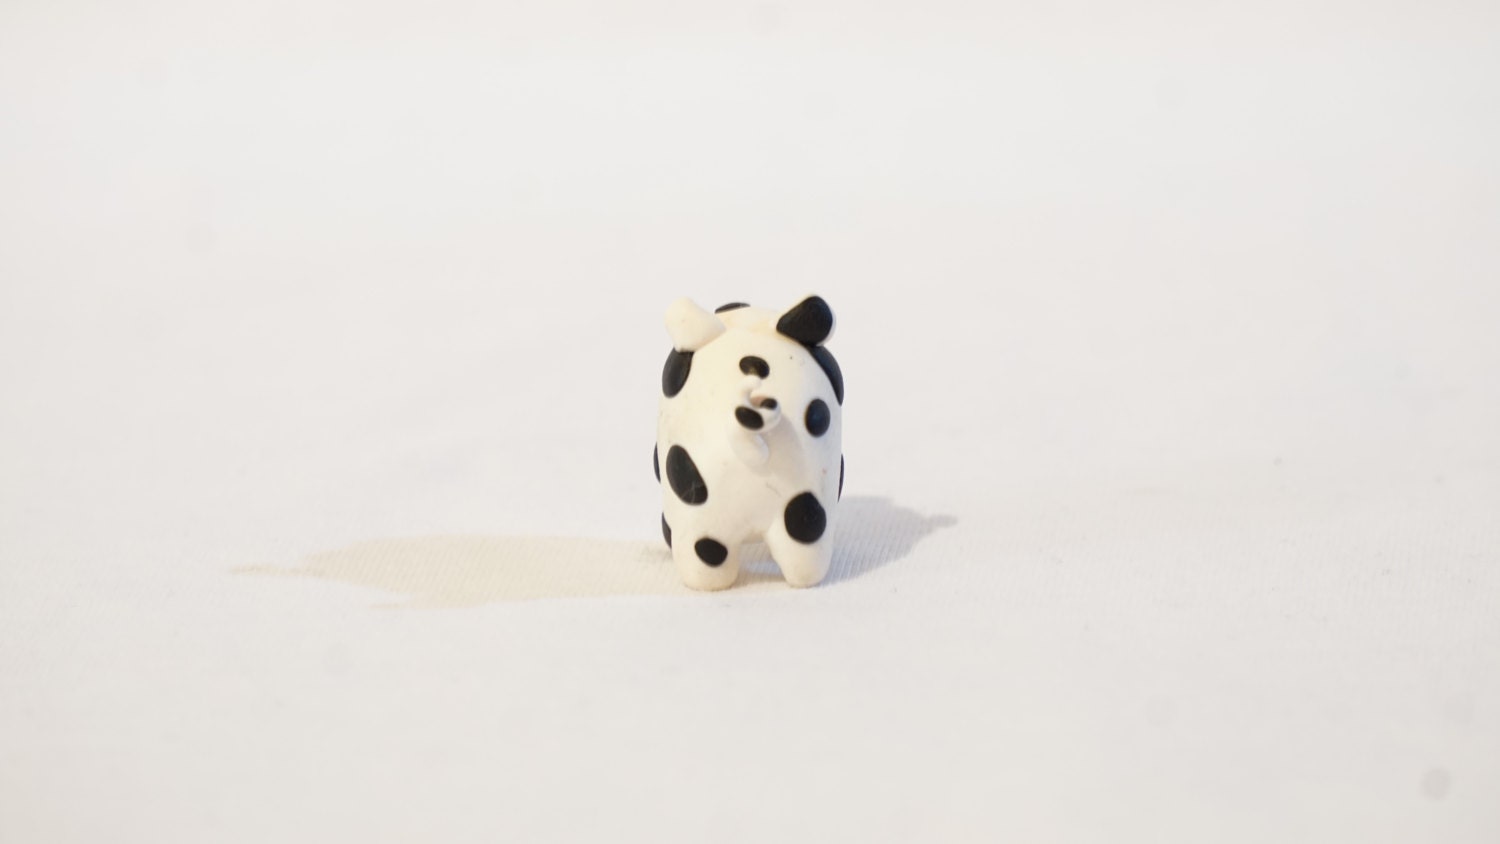 Miniature , Cute Little Polymer Clay Fimo - Figurine Kawaii Style Creatures